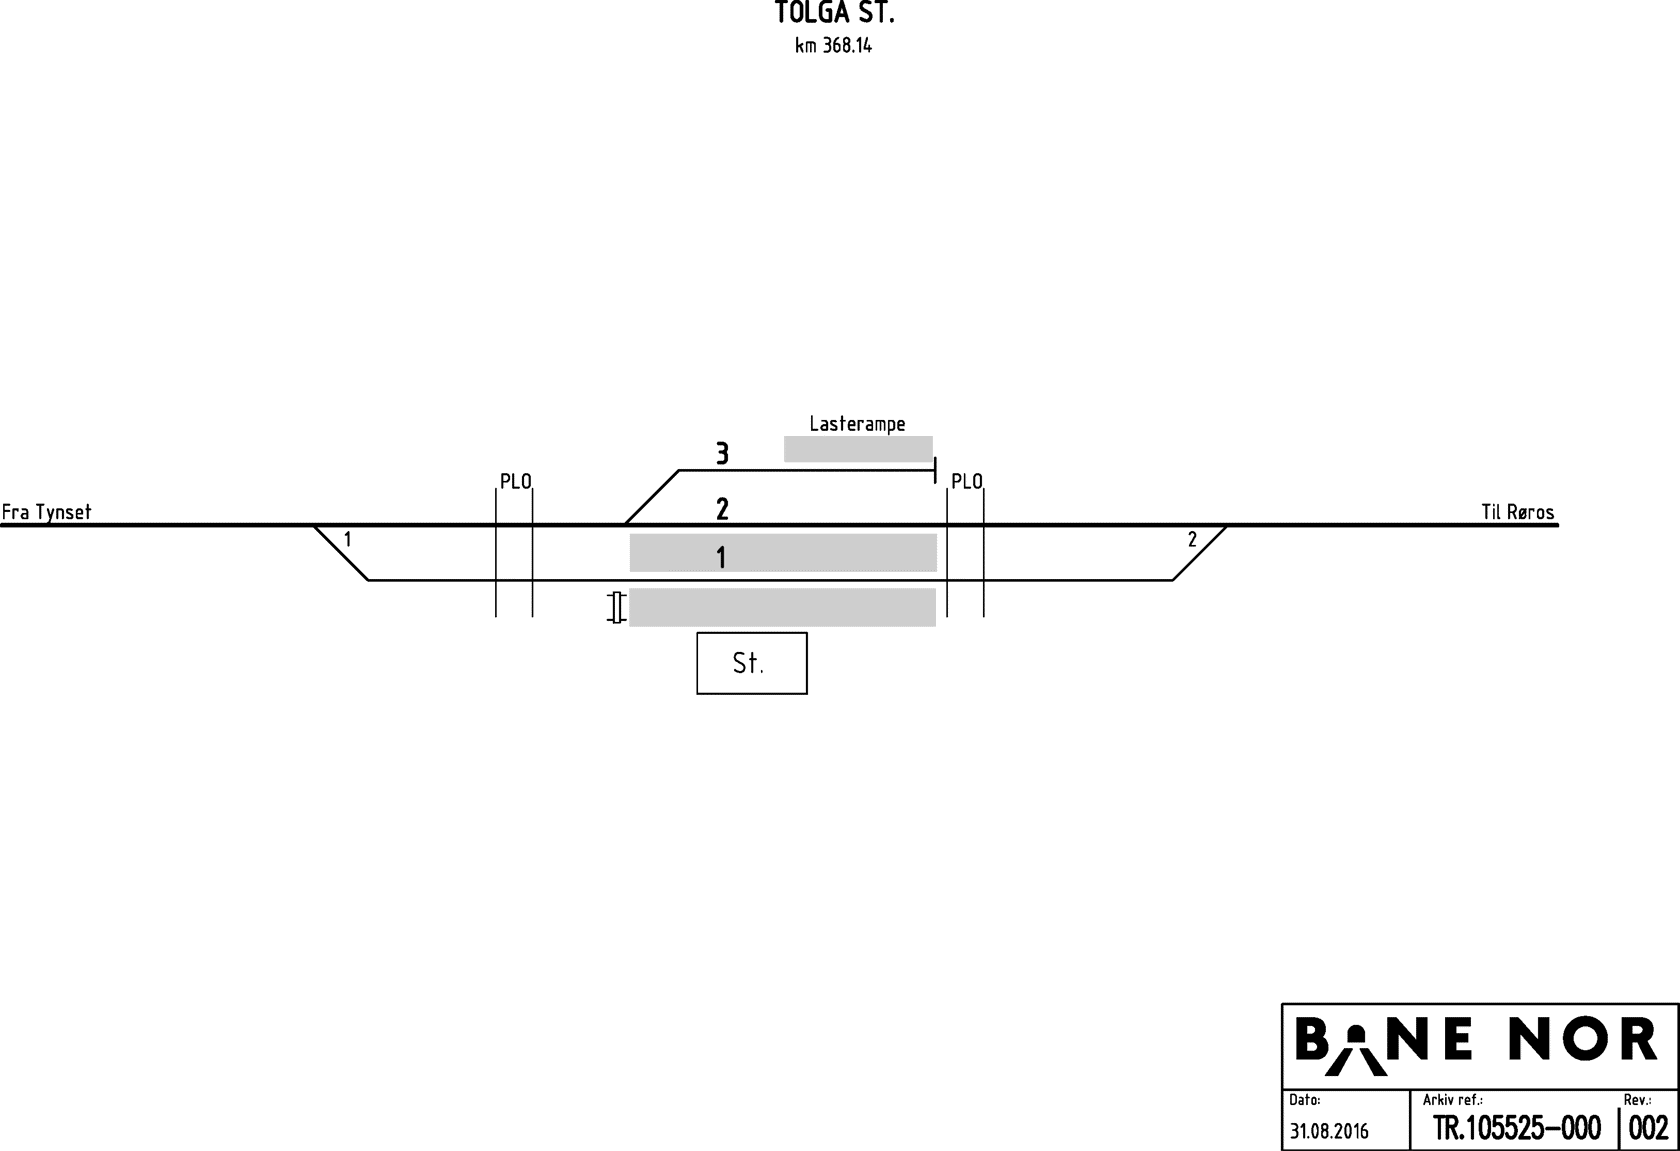 Track plan Tolga station